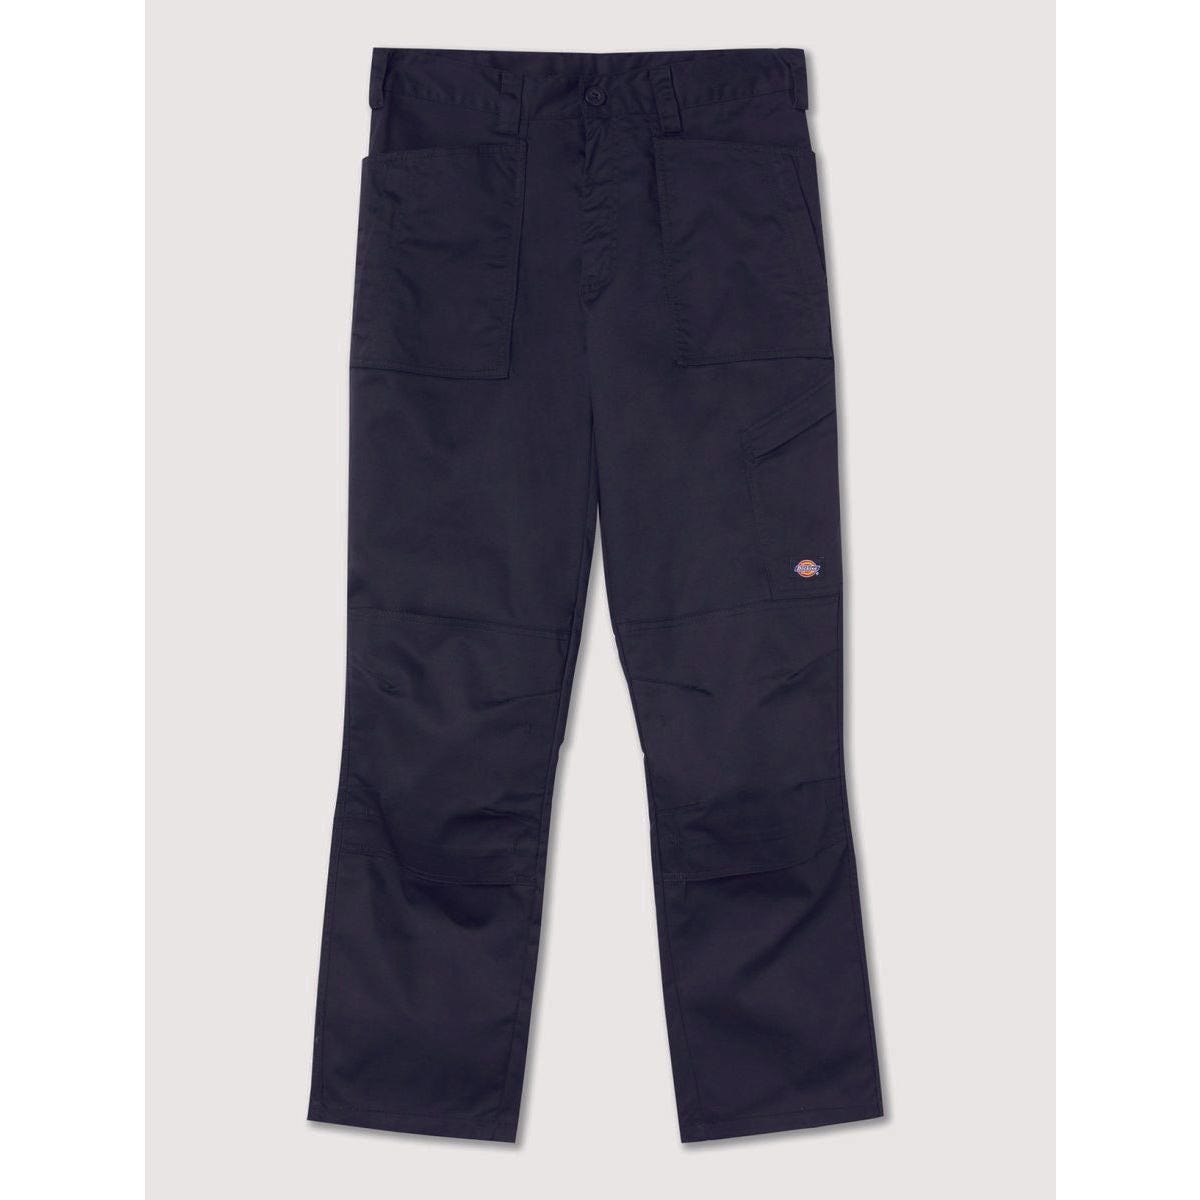 Pantalon de travail Action Flex bleu marine - Dickies - Taille 36 7